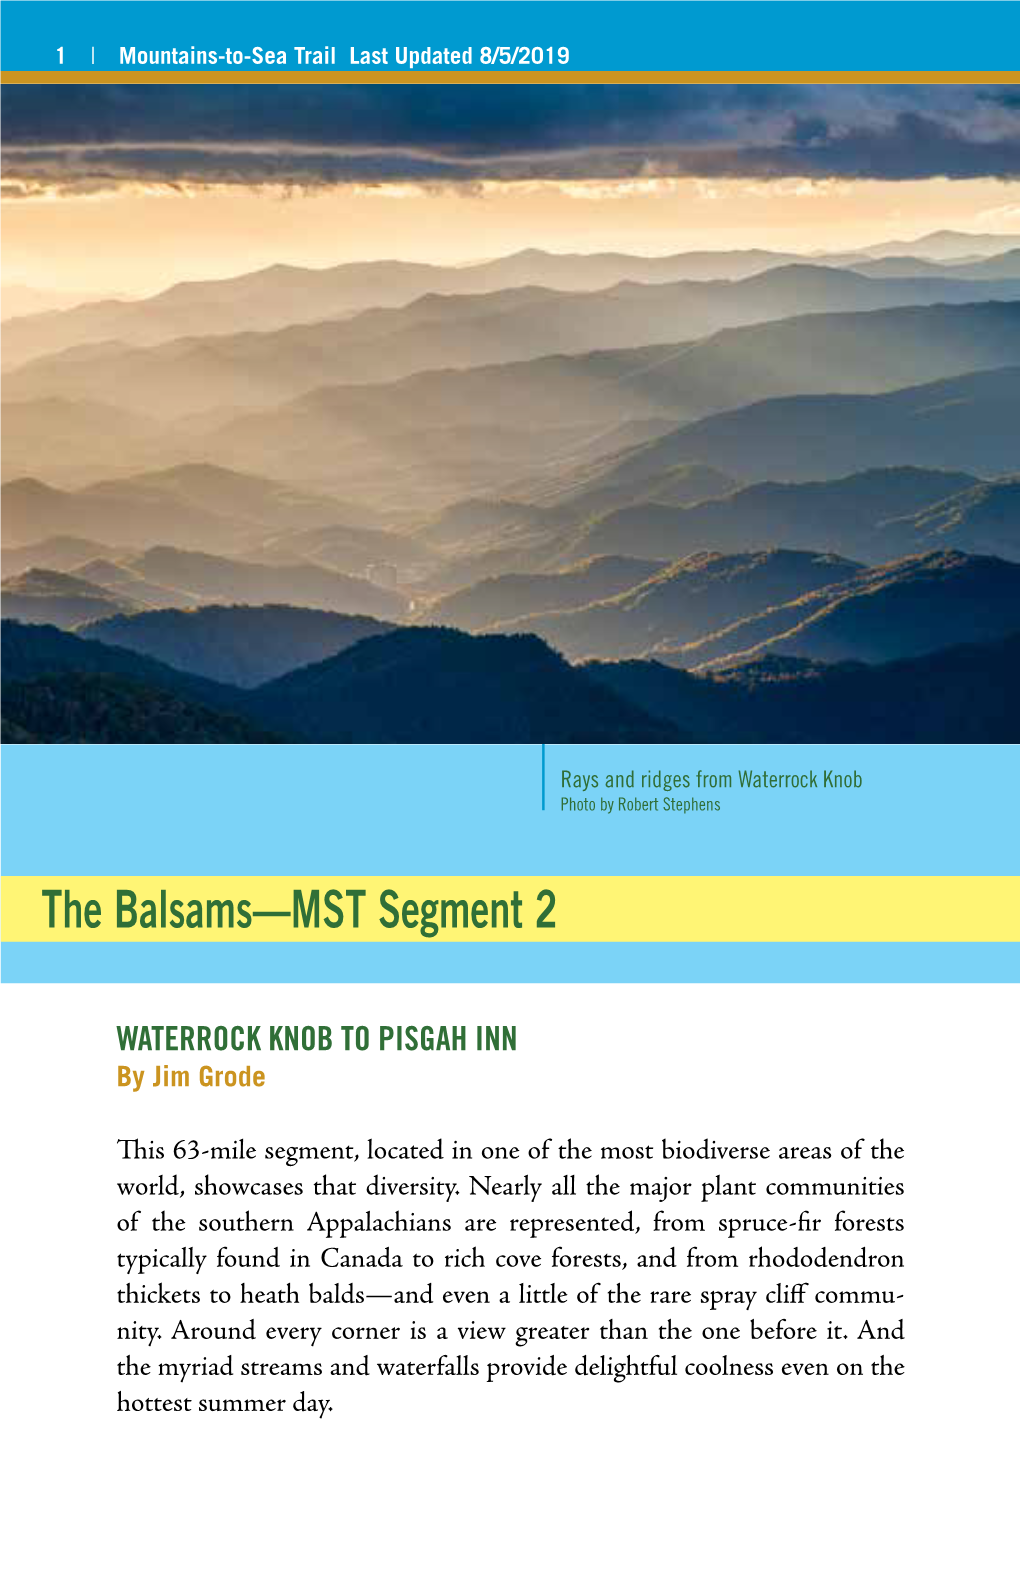 The Balsams—MST Segment 2